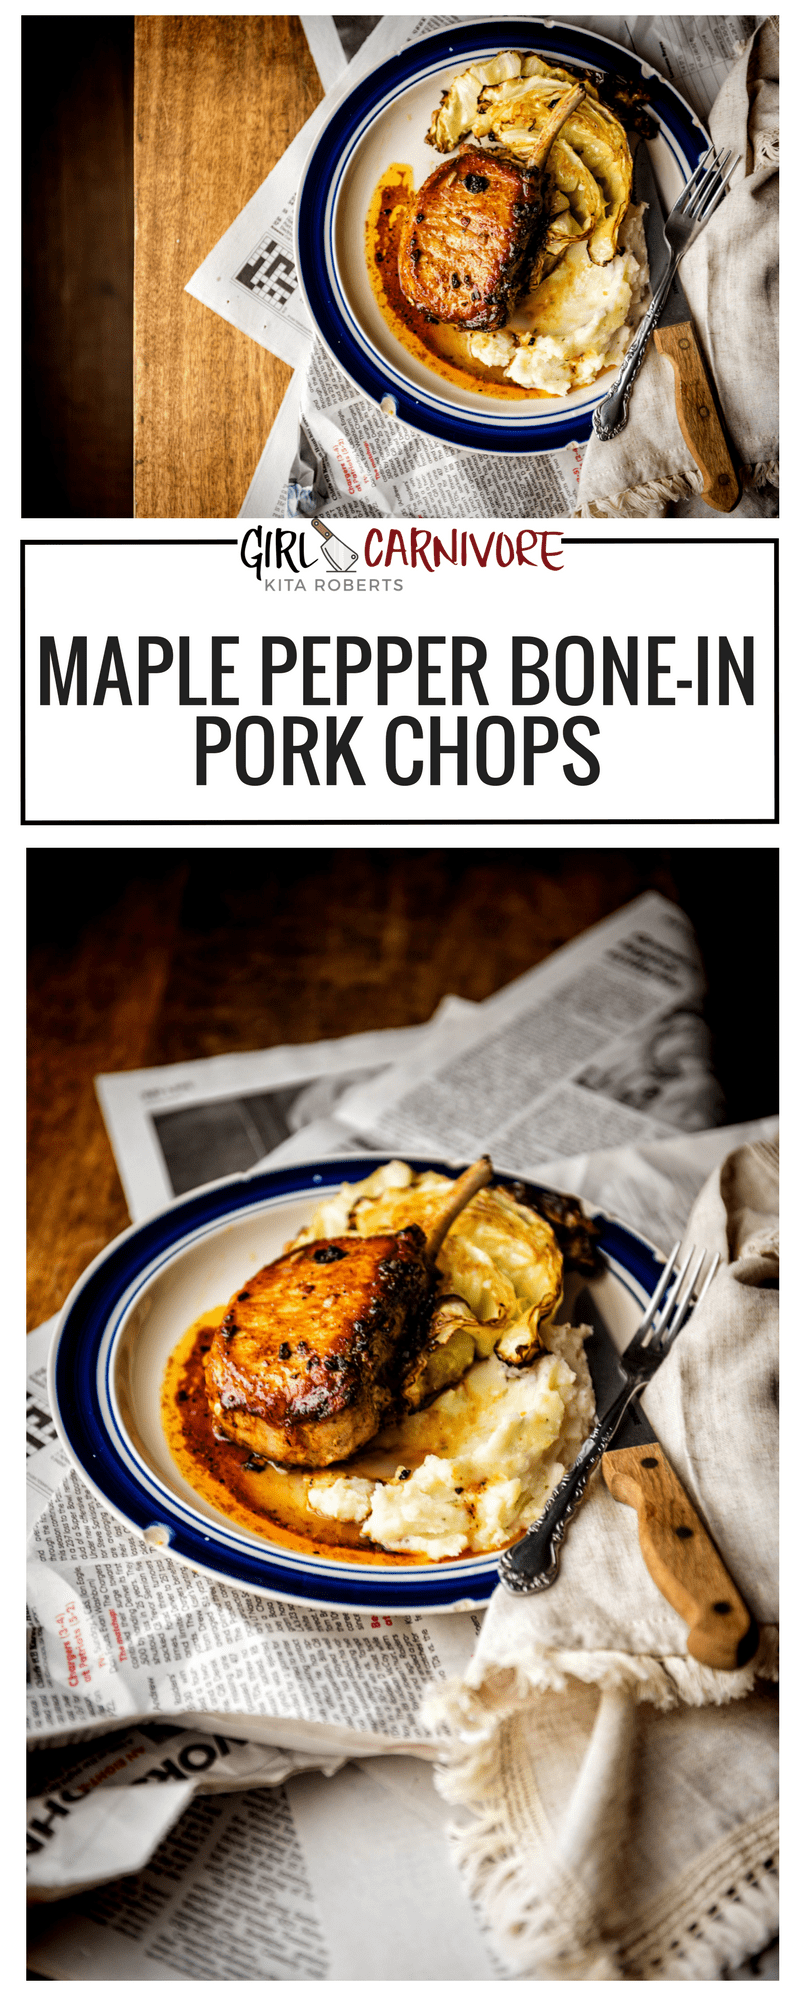 Maple Pepper Bone-In Pork Chops Recipe | KIta Roberts GirlCanivore.com